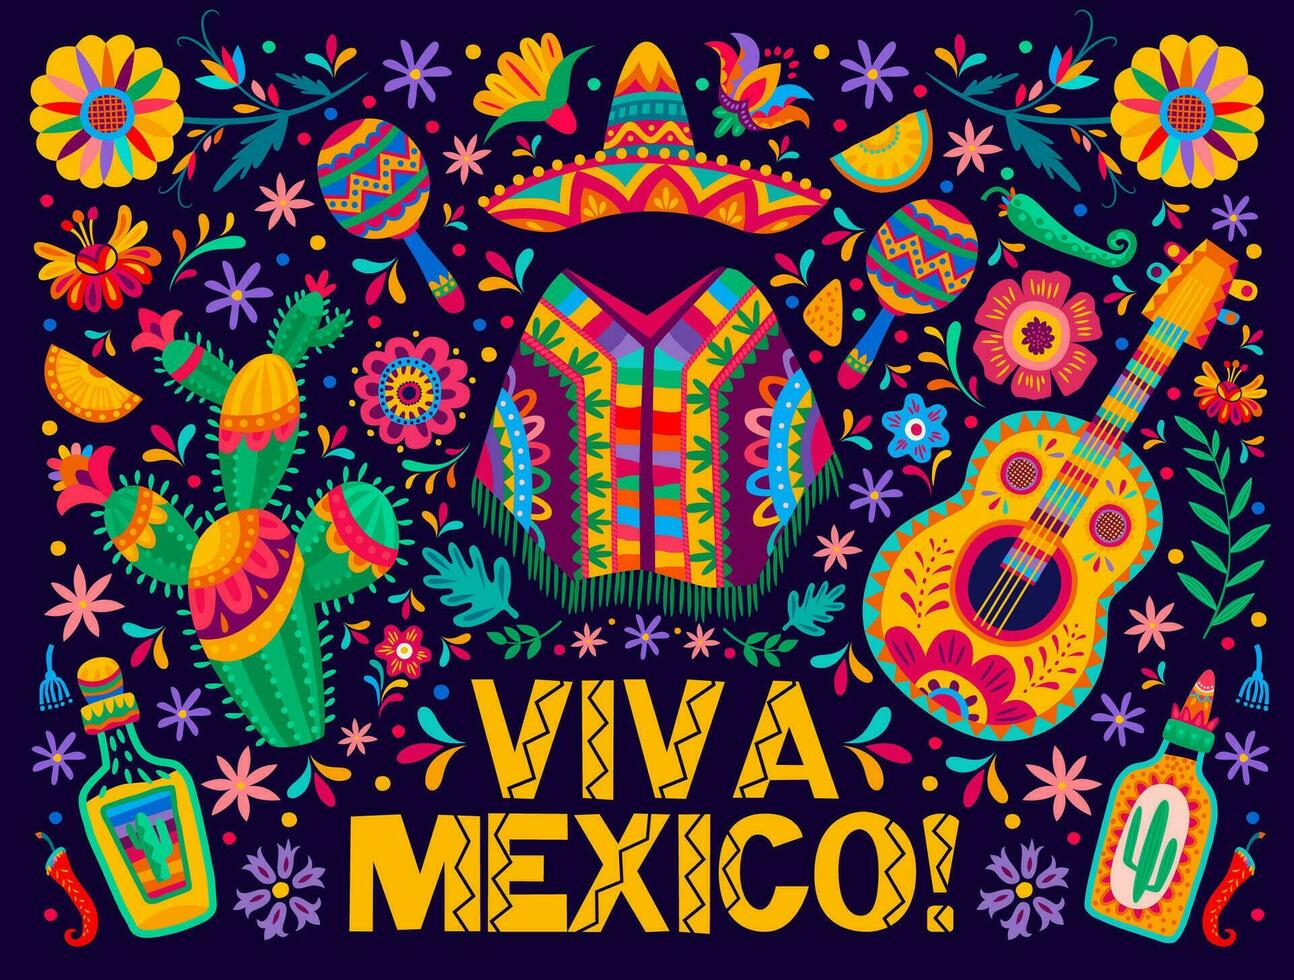 Viva Mexico banner with sombrero, guitar, poncho vector